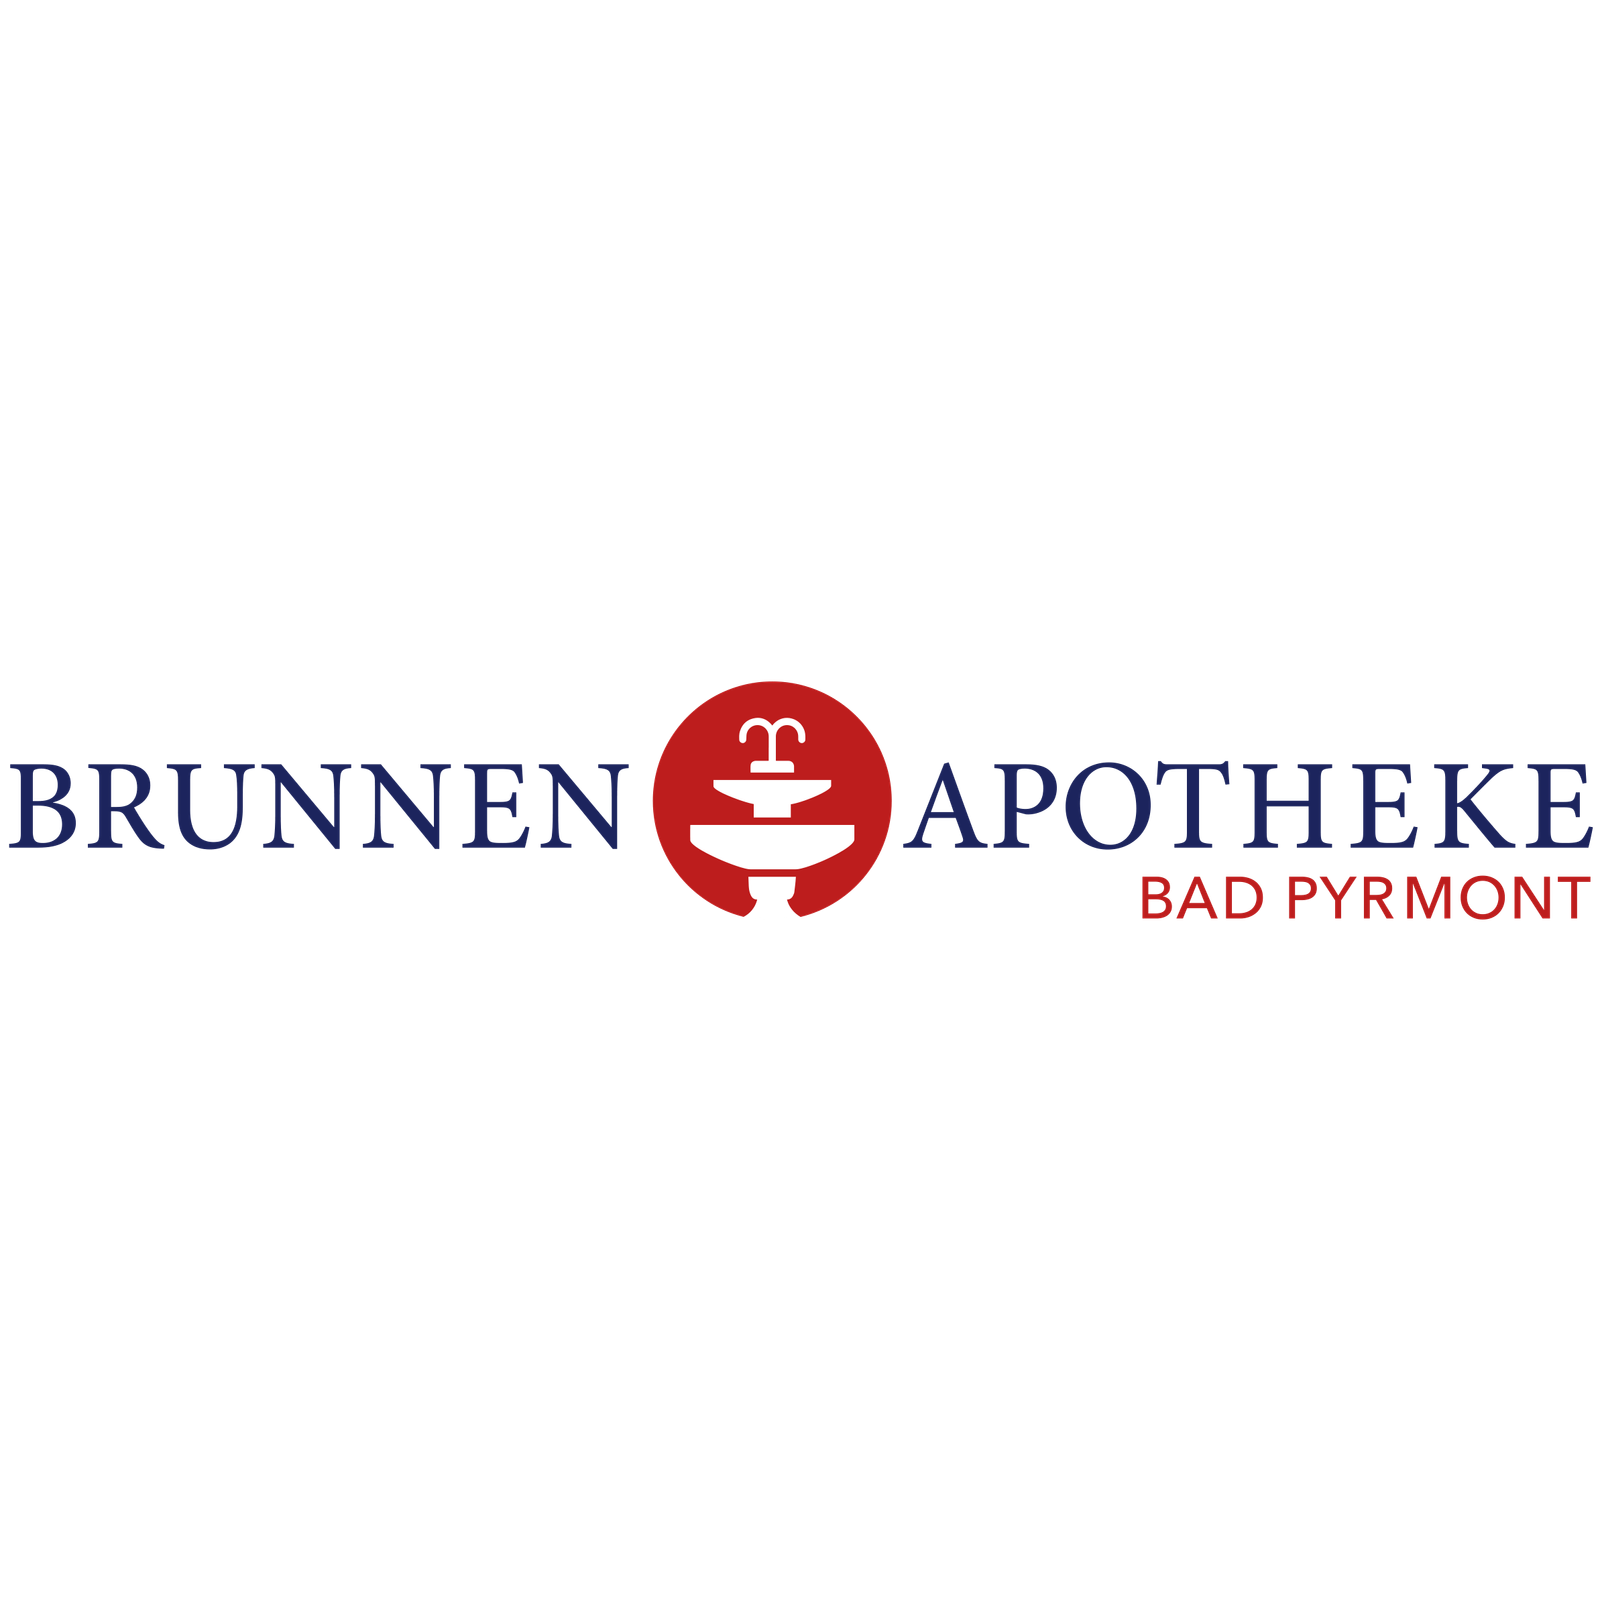 Brunnen-Apotheke in Bad Pyrmont - Logo